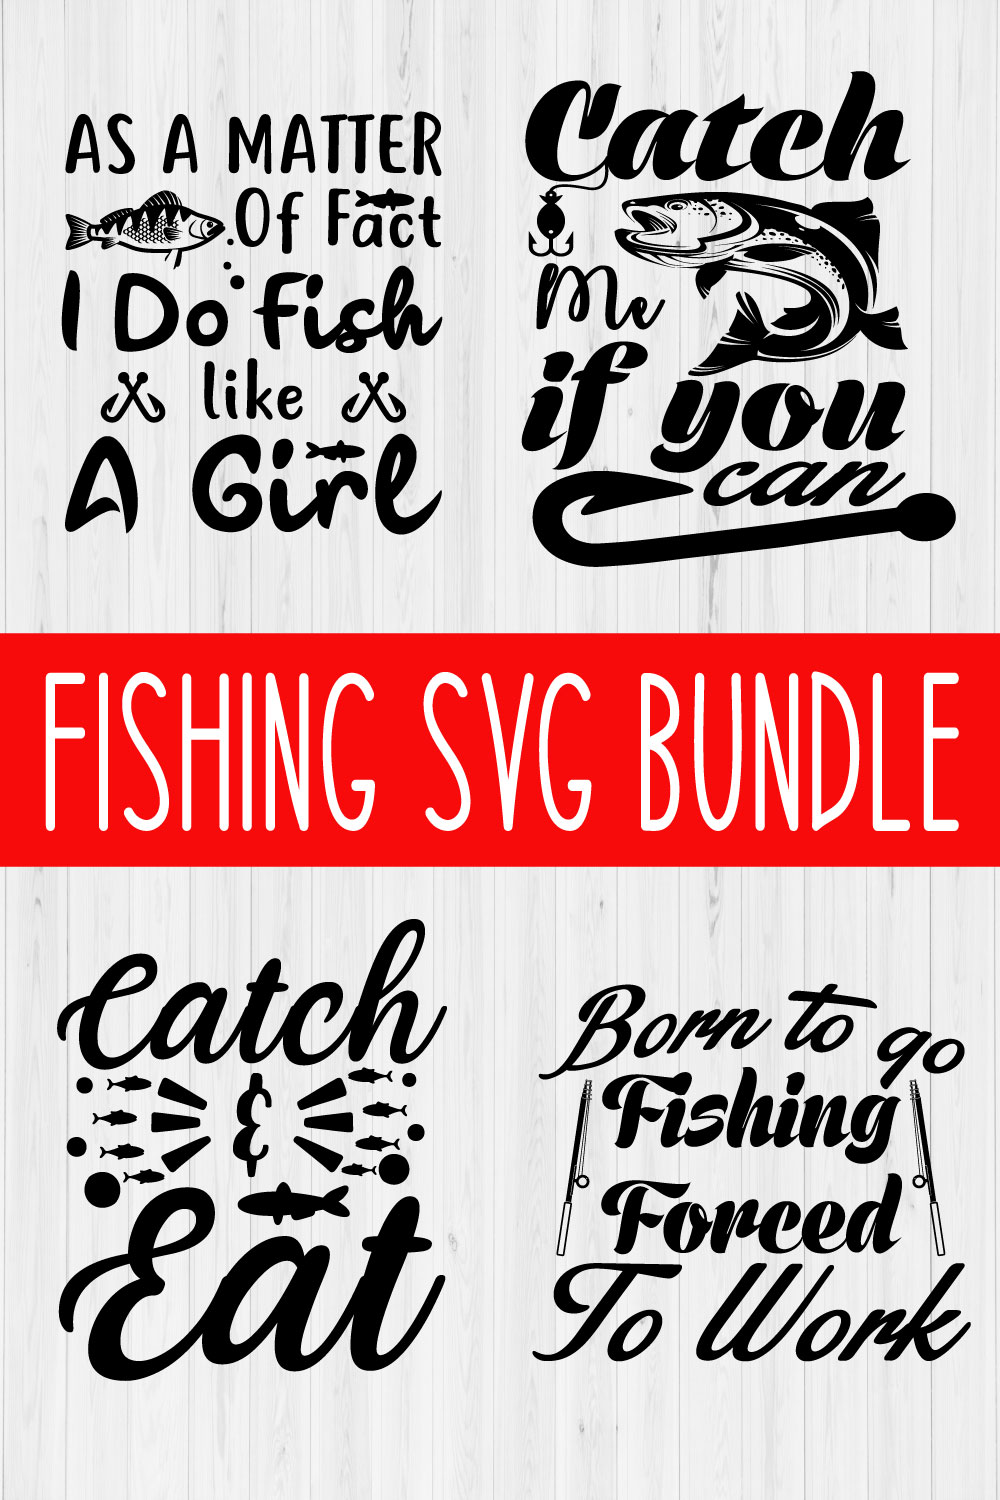 Fishing Svg Bundle Vol1 pinterest preview image.